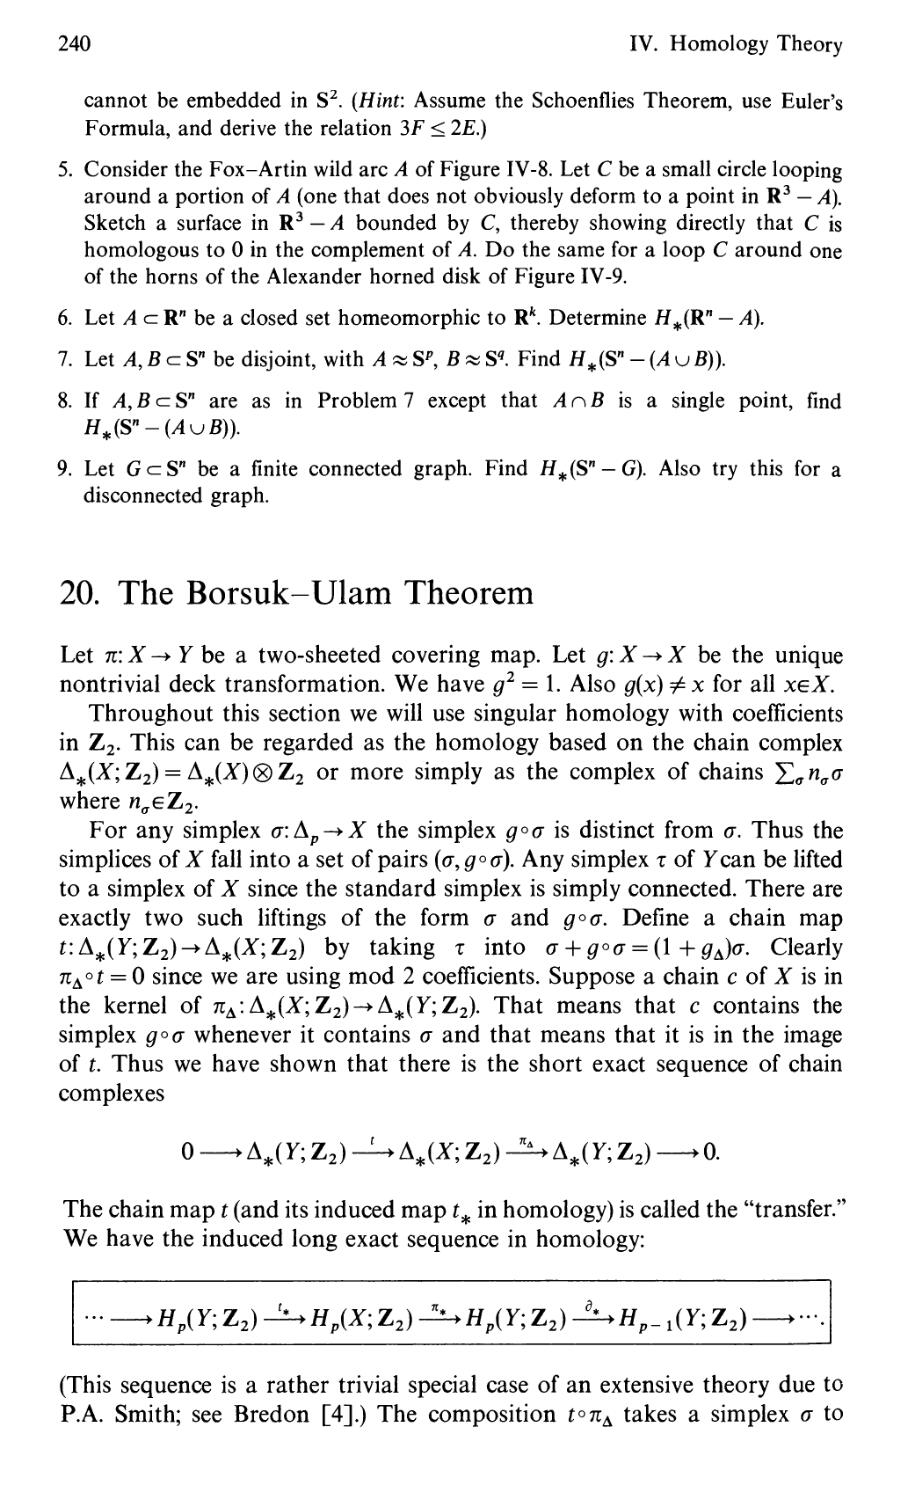 20. The Borsuk-Ulam Theorem